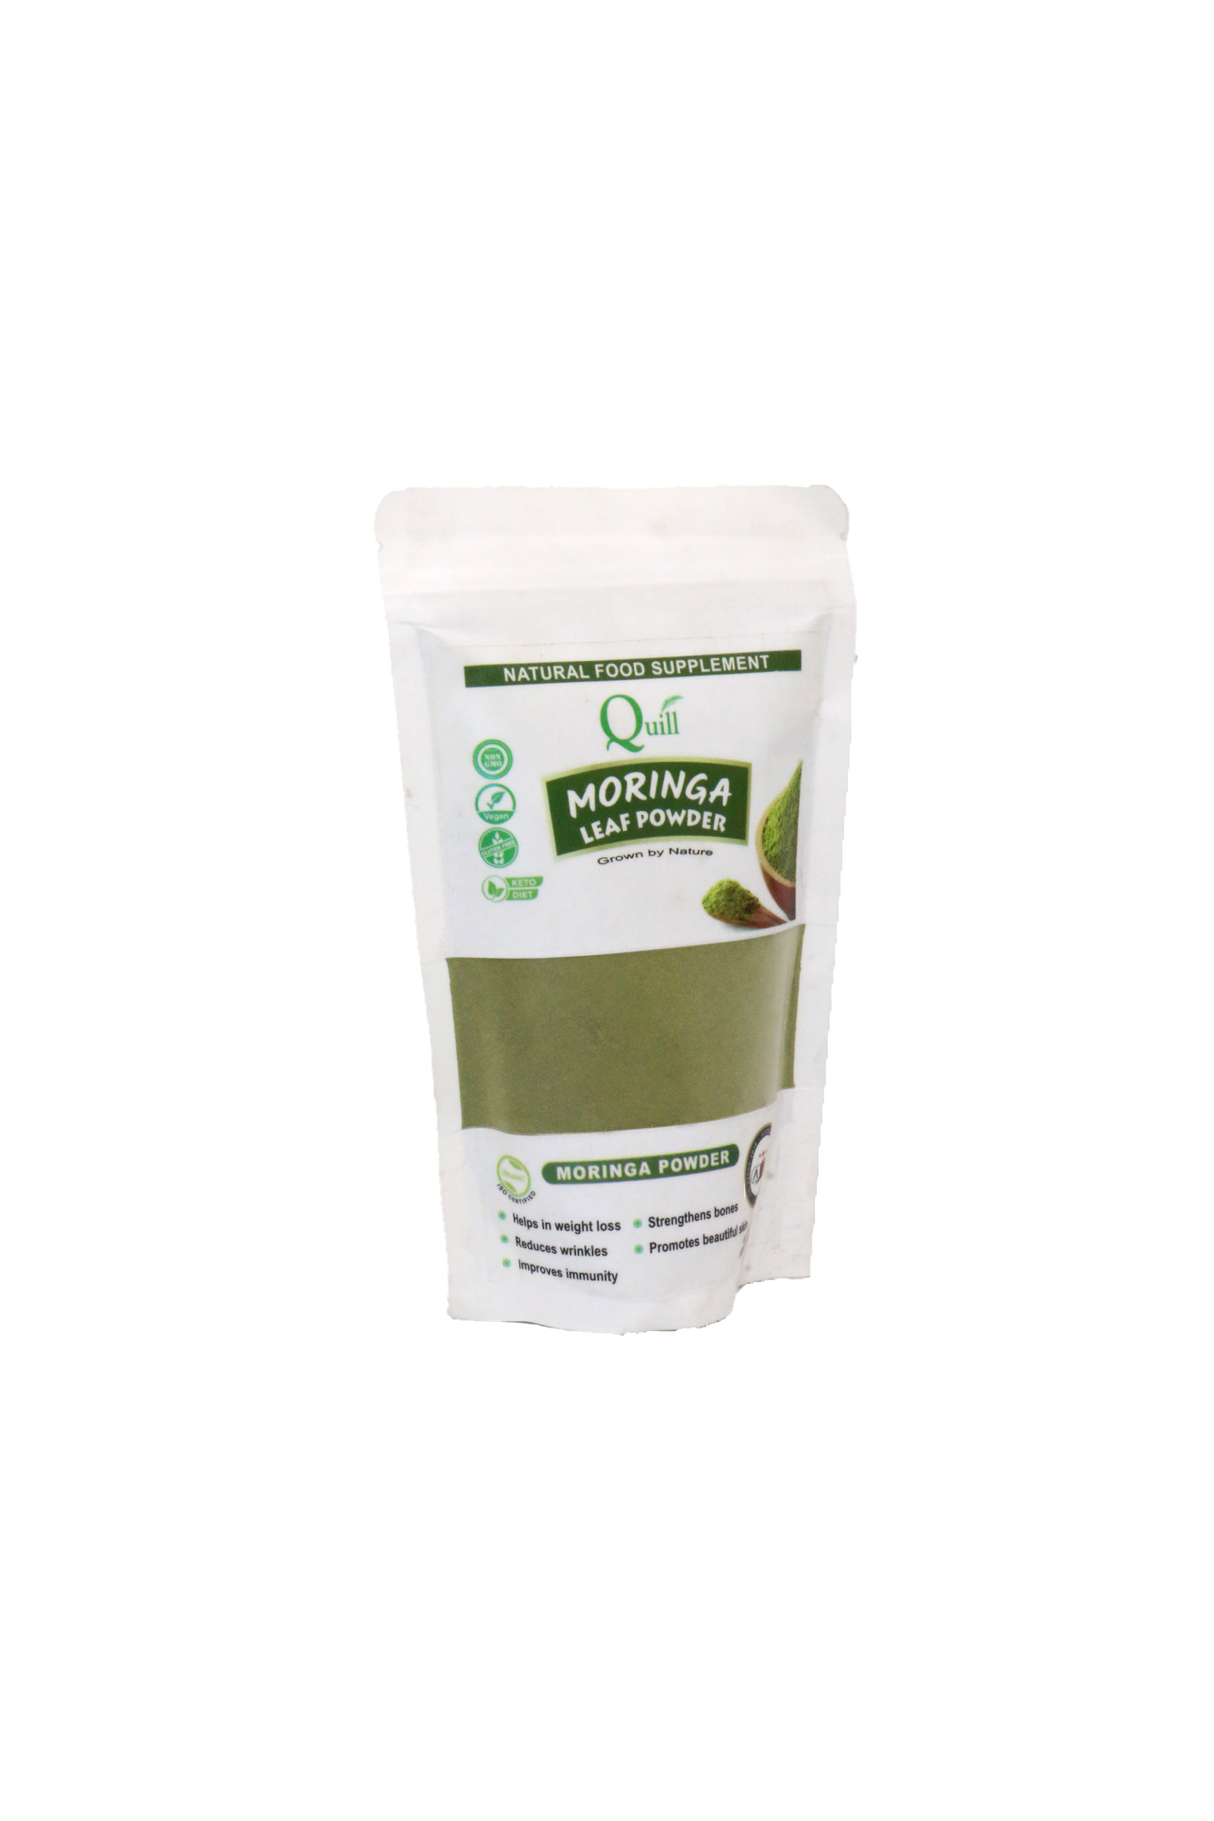 quill moringa leaf powder 125g